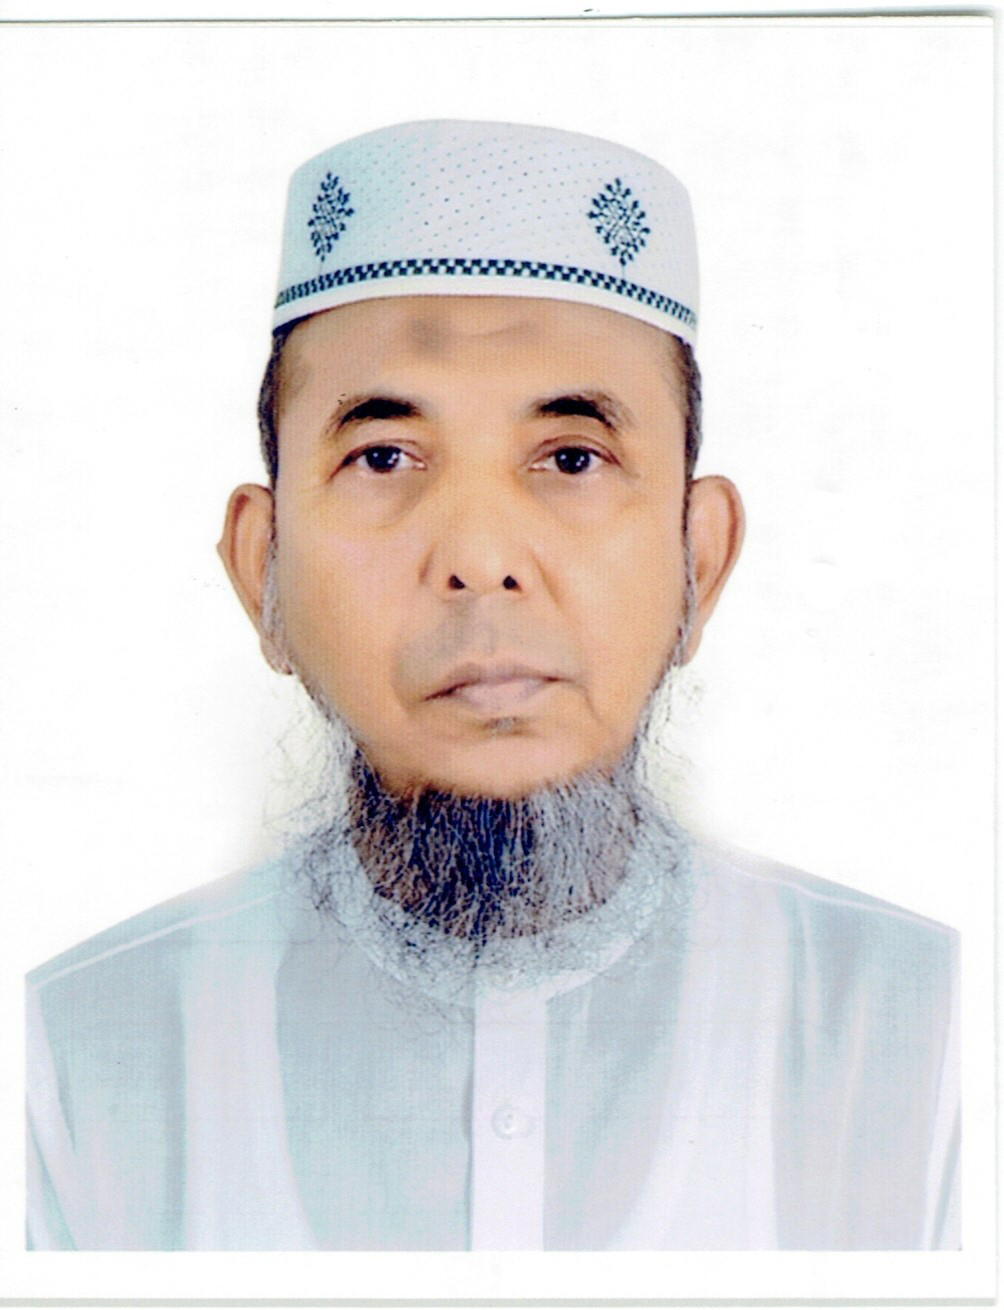 Md. Abu Bakkar Siddique